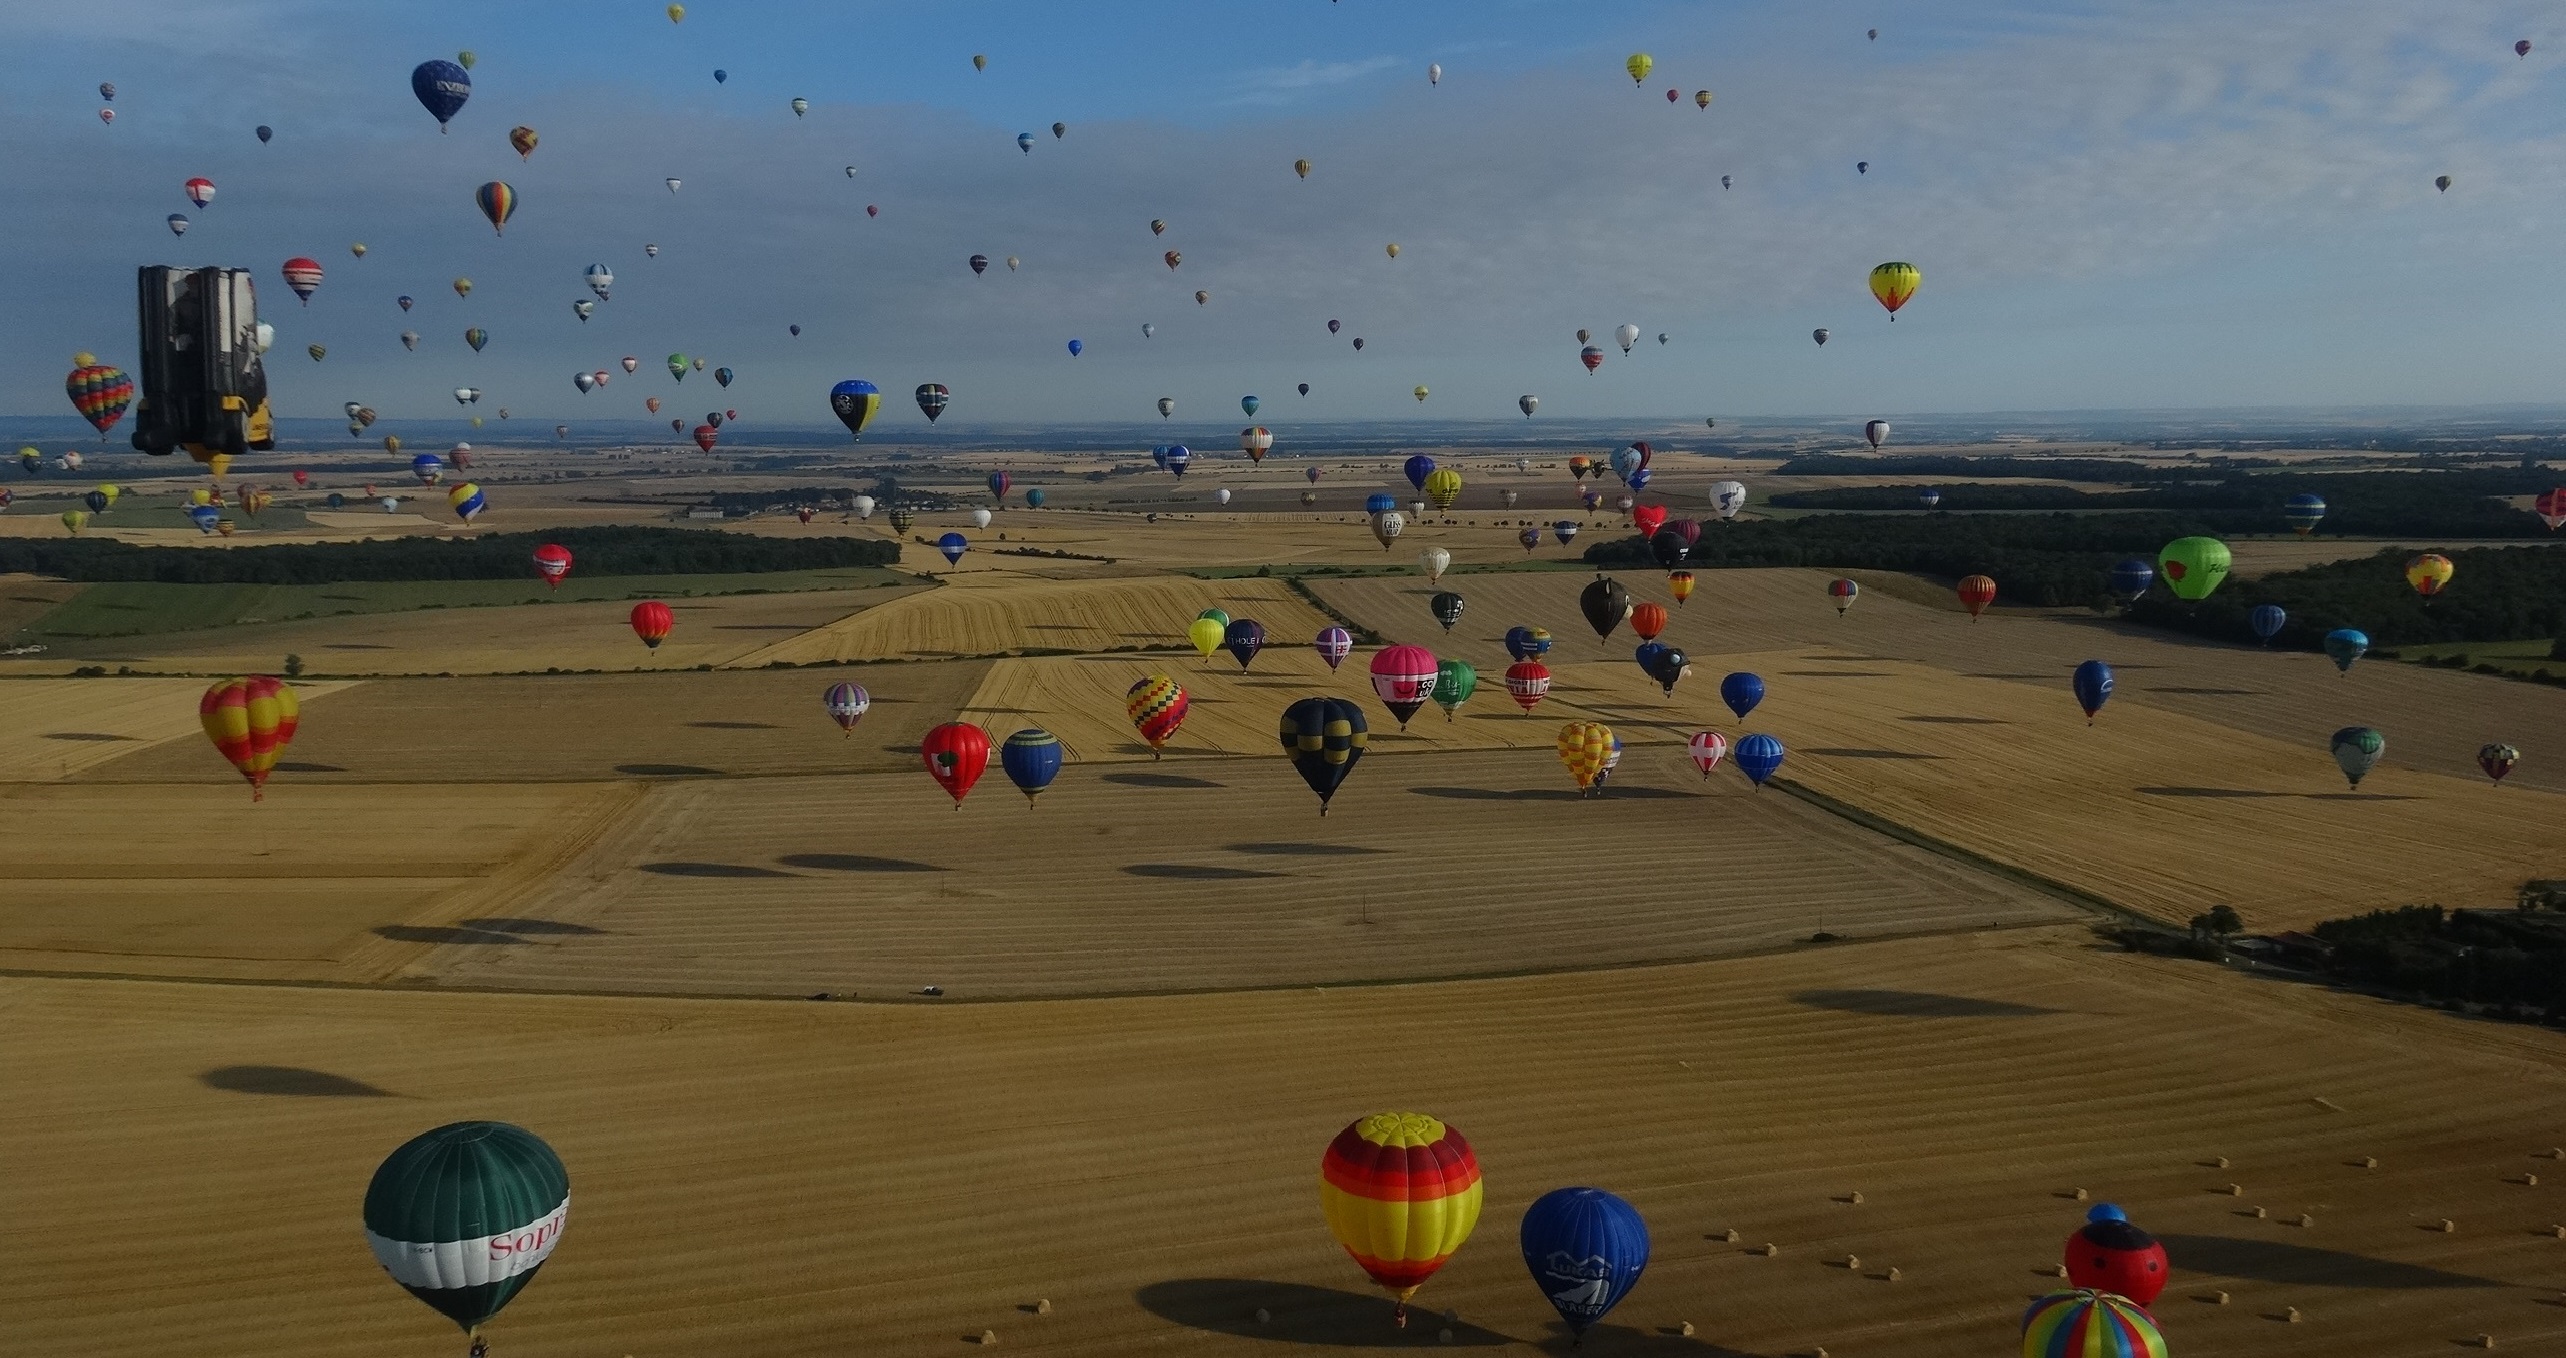 Slide 3 – Heißluftballon